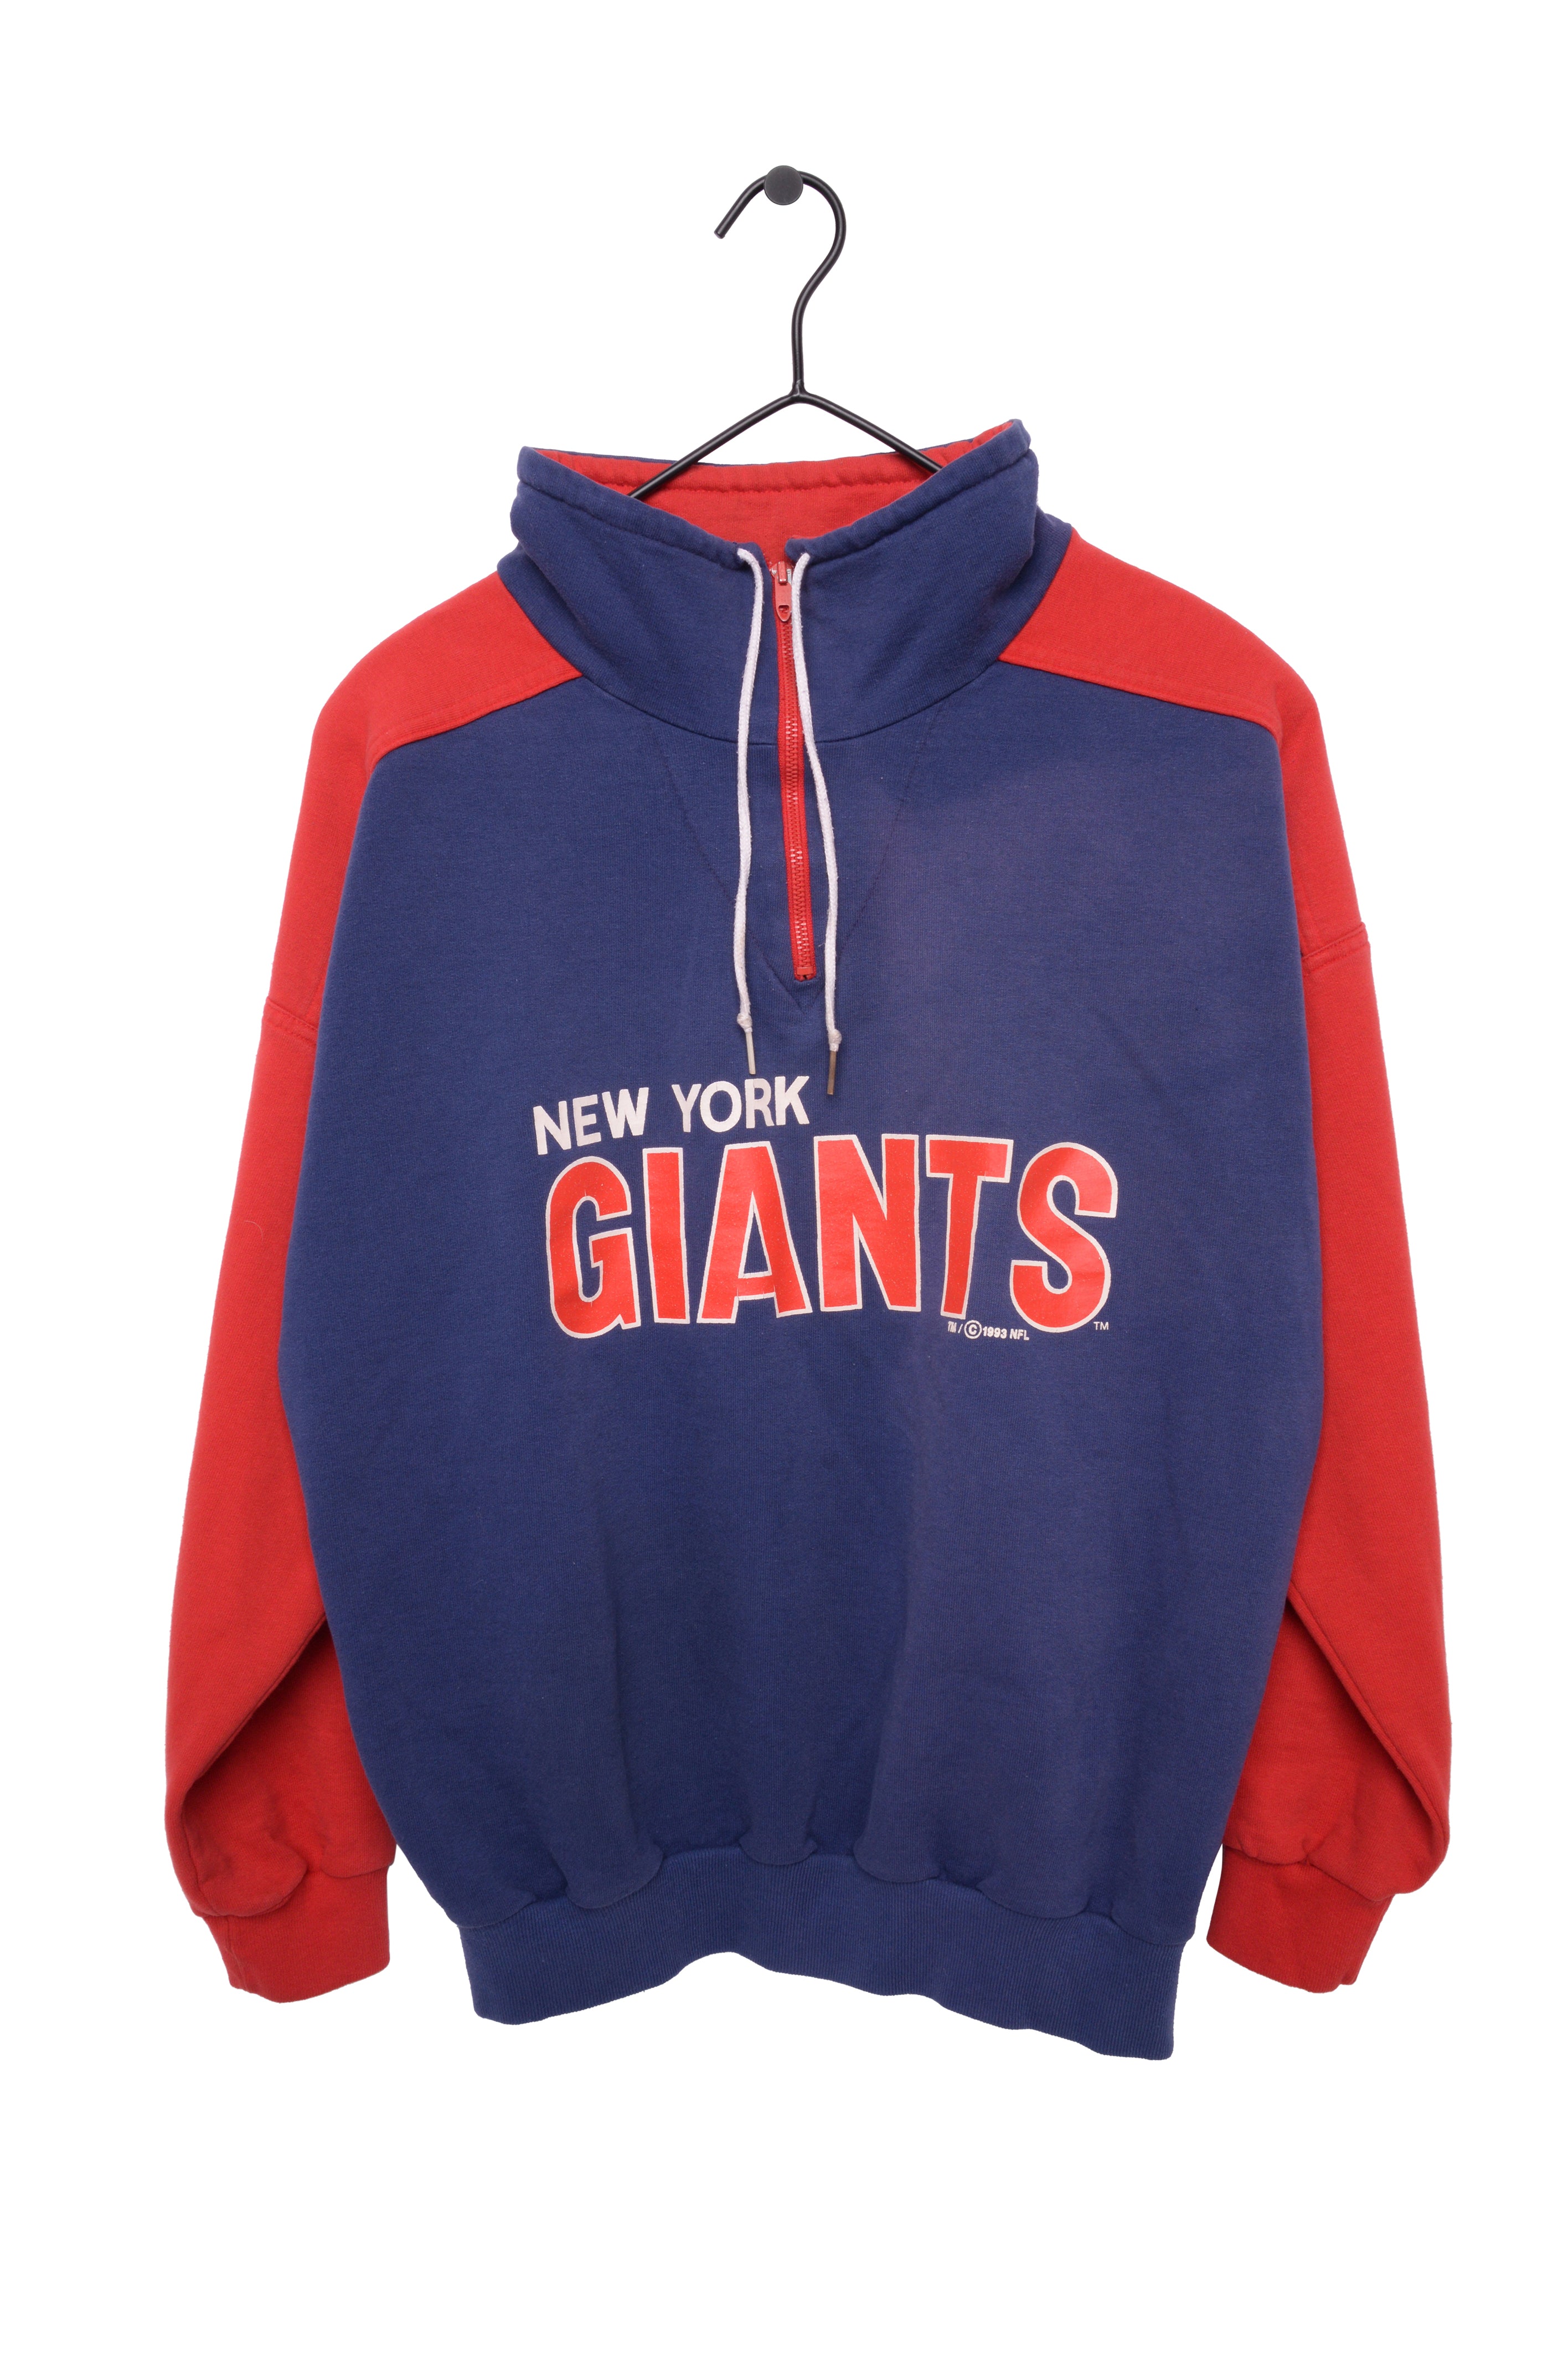 1993 New York Giants Sweatshirt Free Shipping - The Vintage Twin